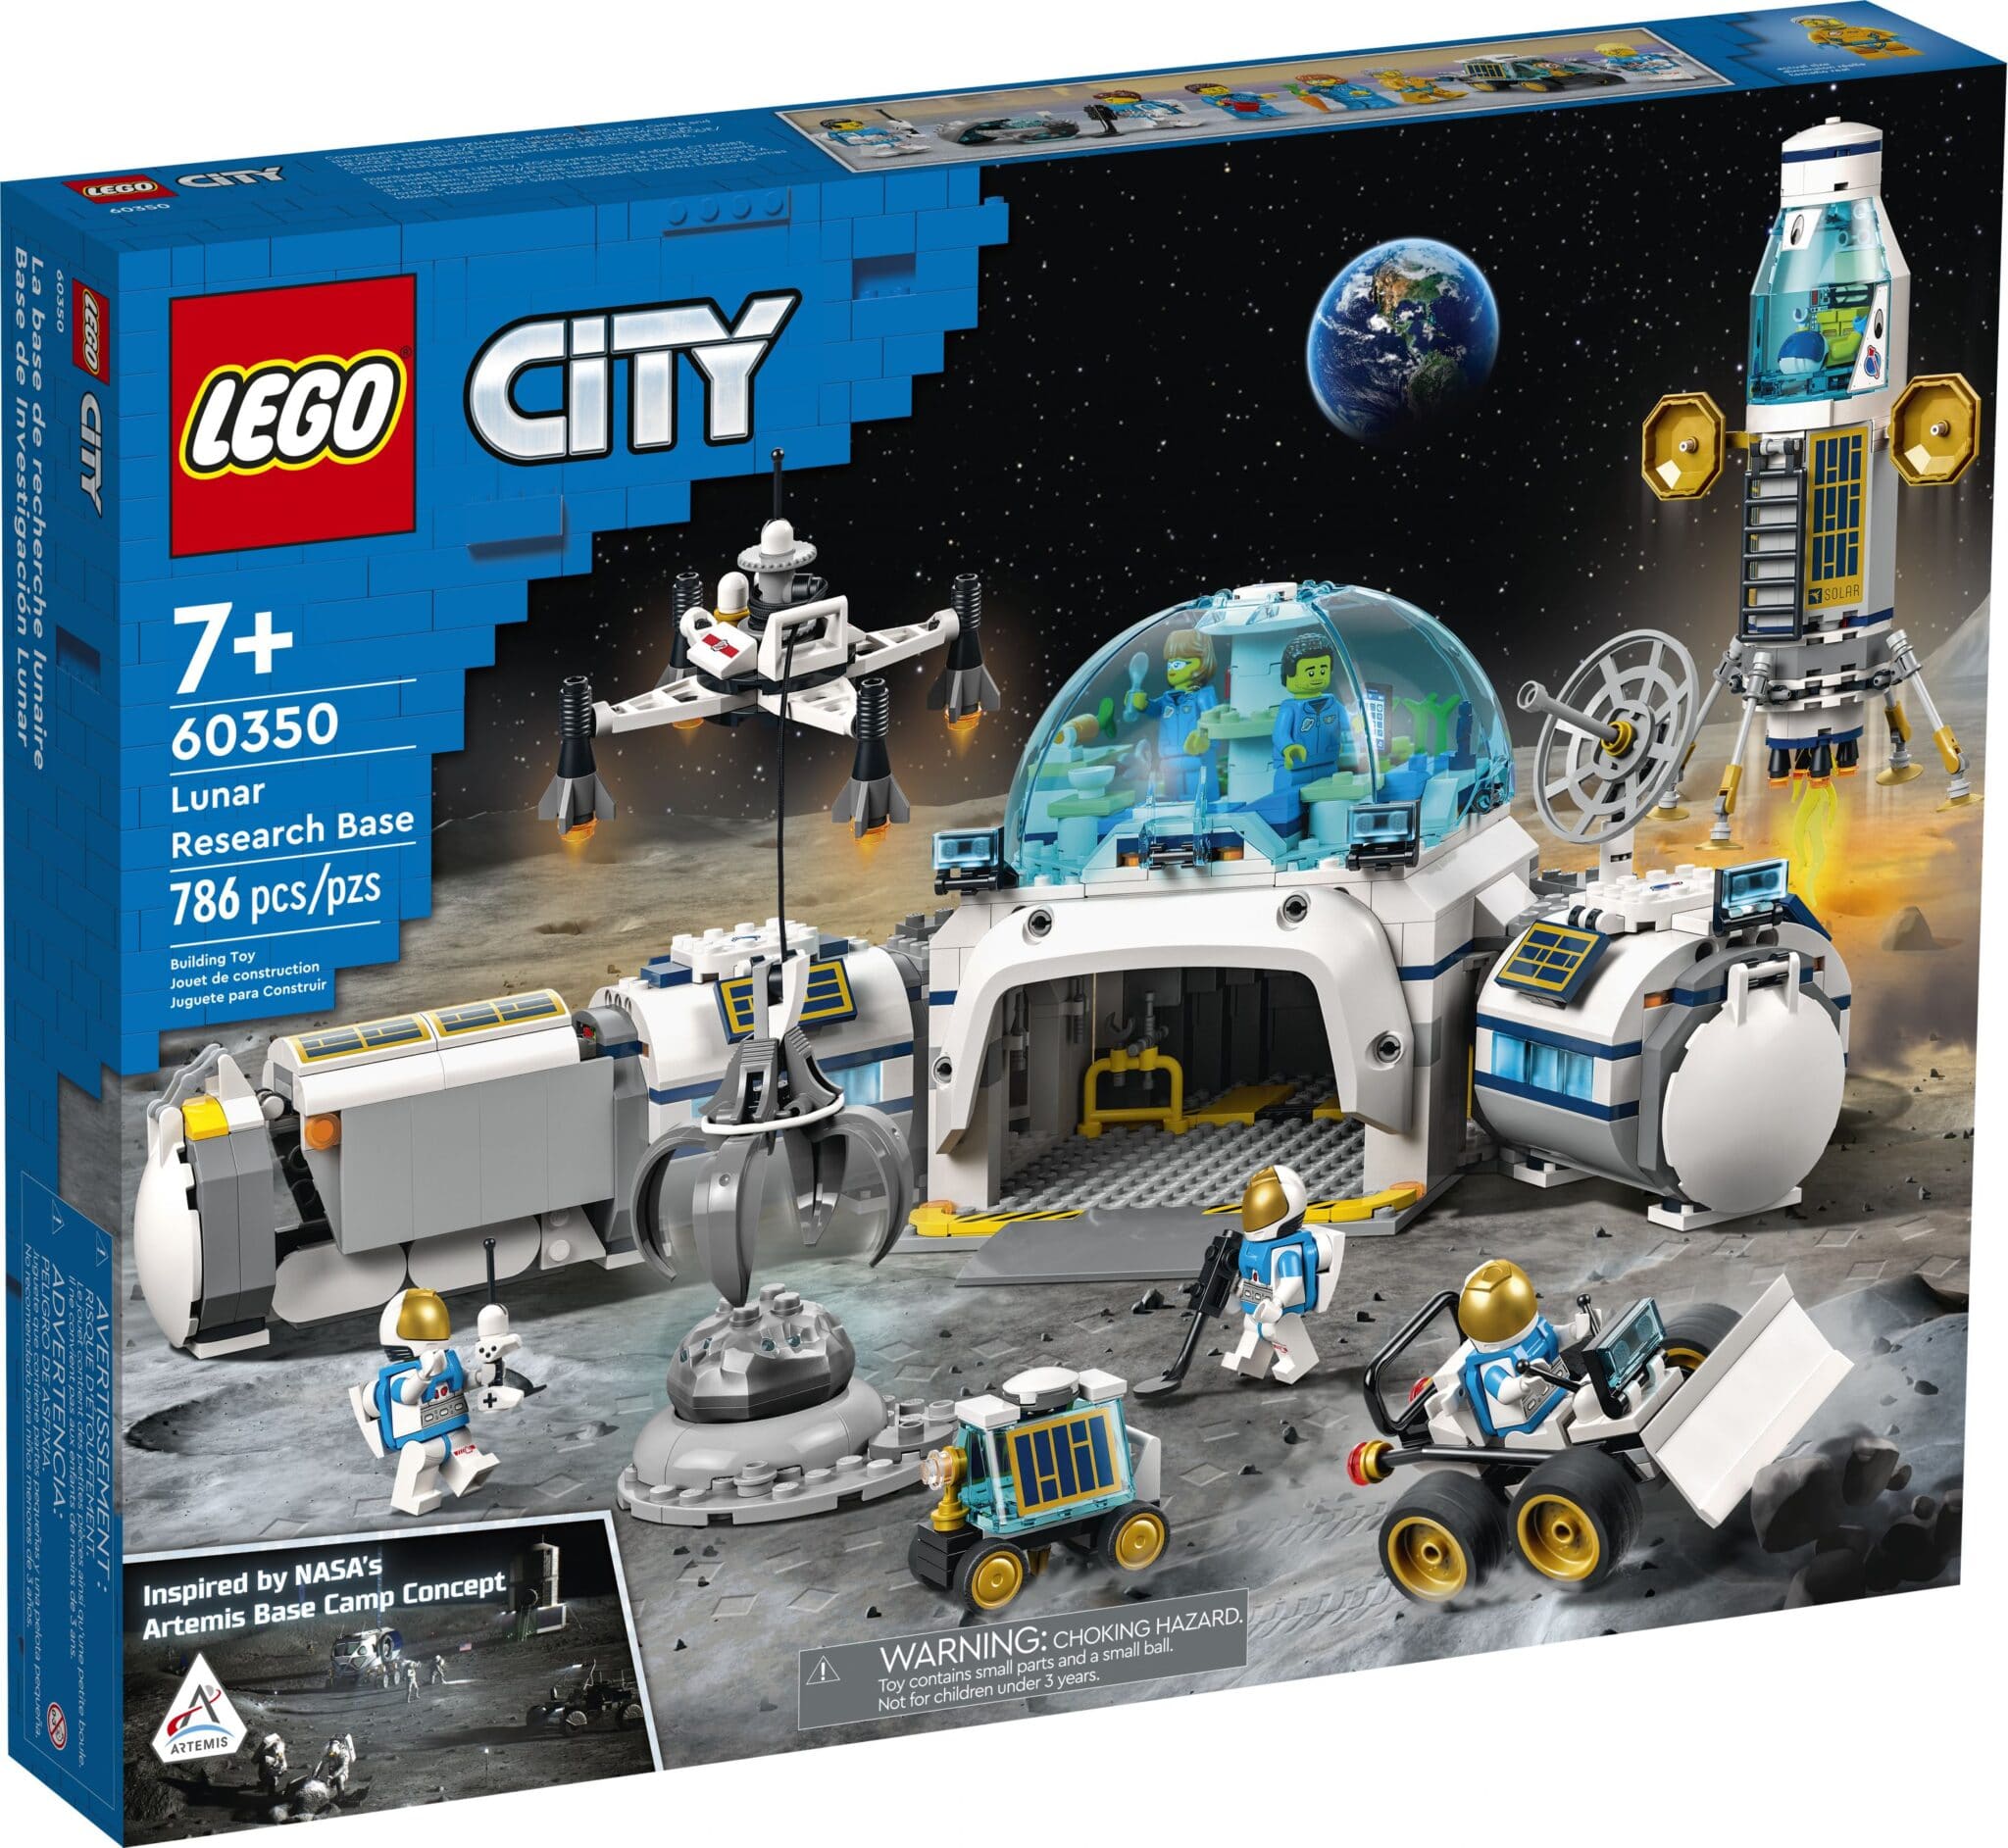 Lego City Lego Sets Sales Discounts, Save 44 jlcatj.gob.mx